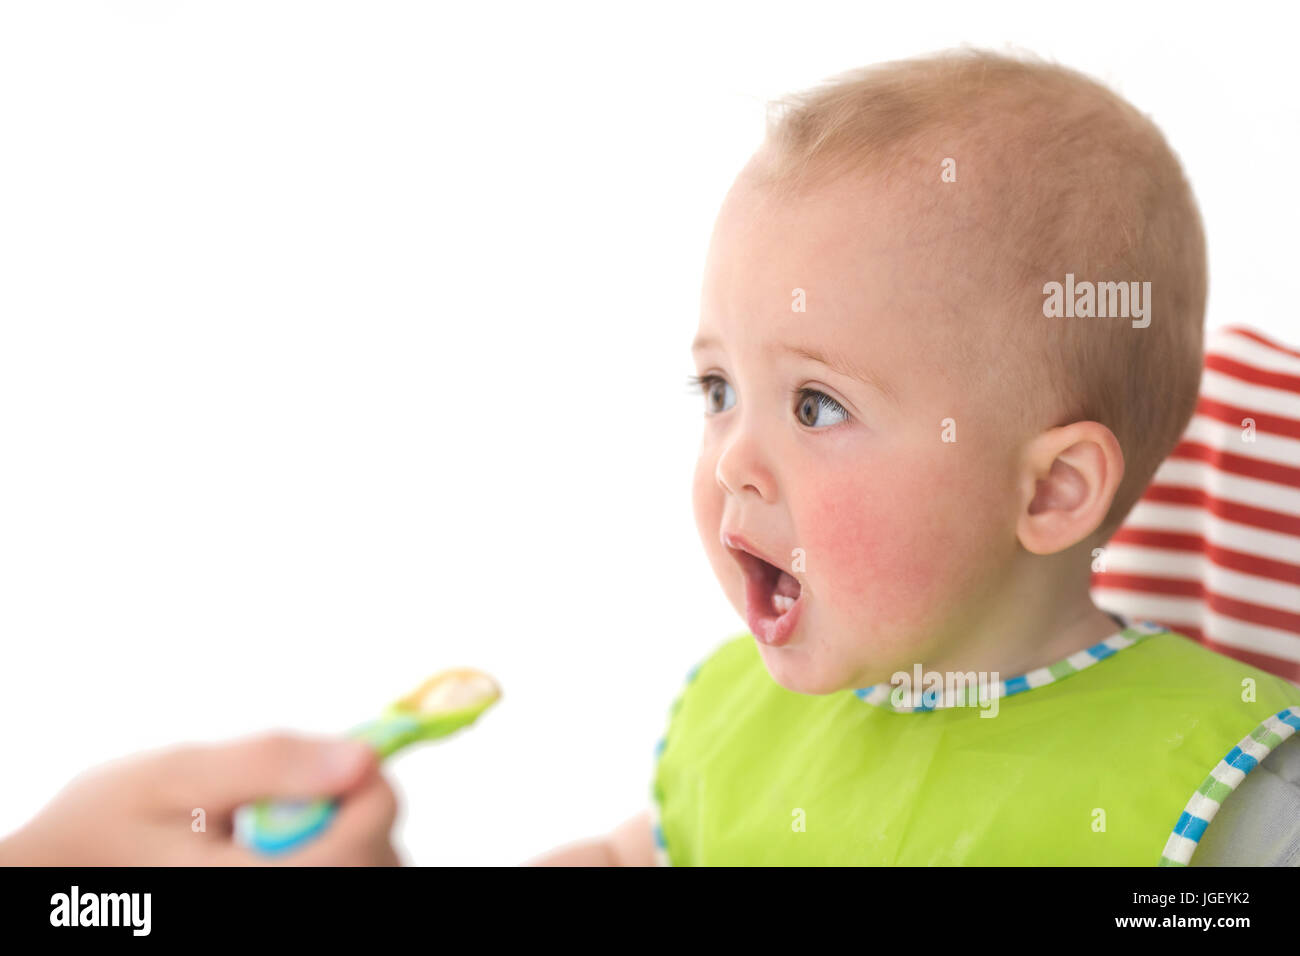 Parent feeding infant child on a white background Stock Photo